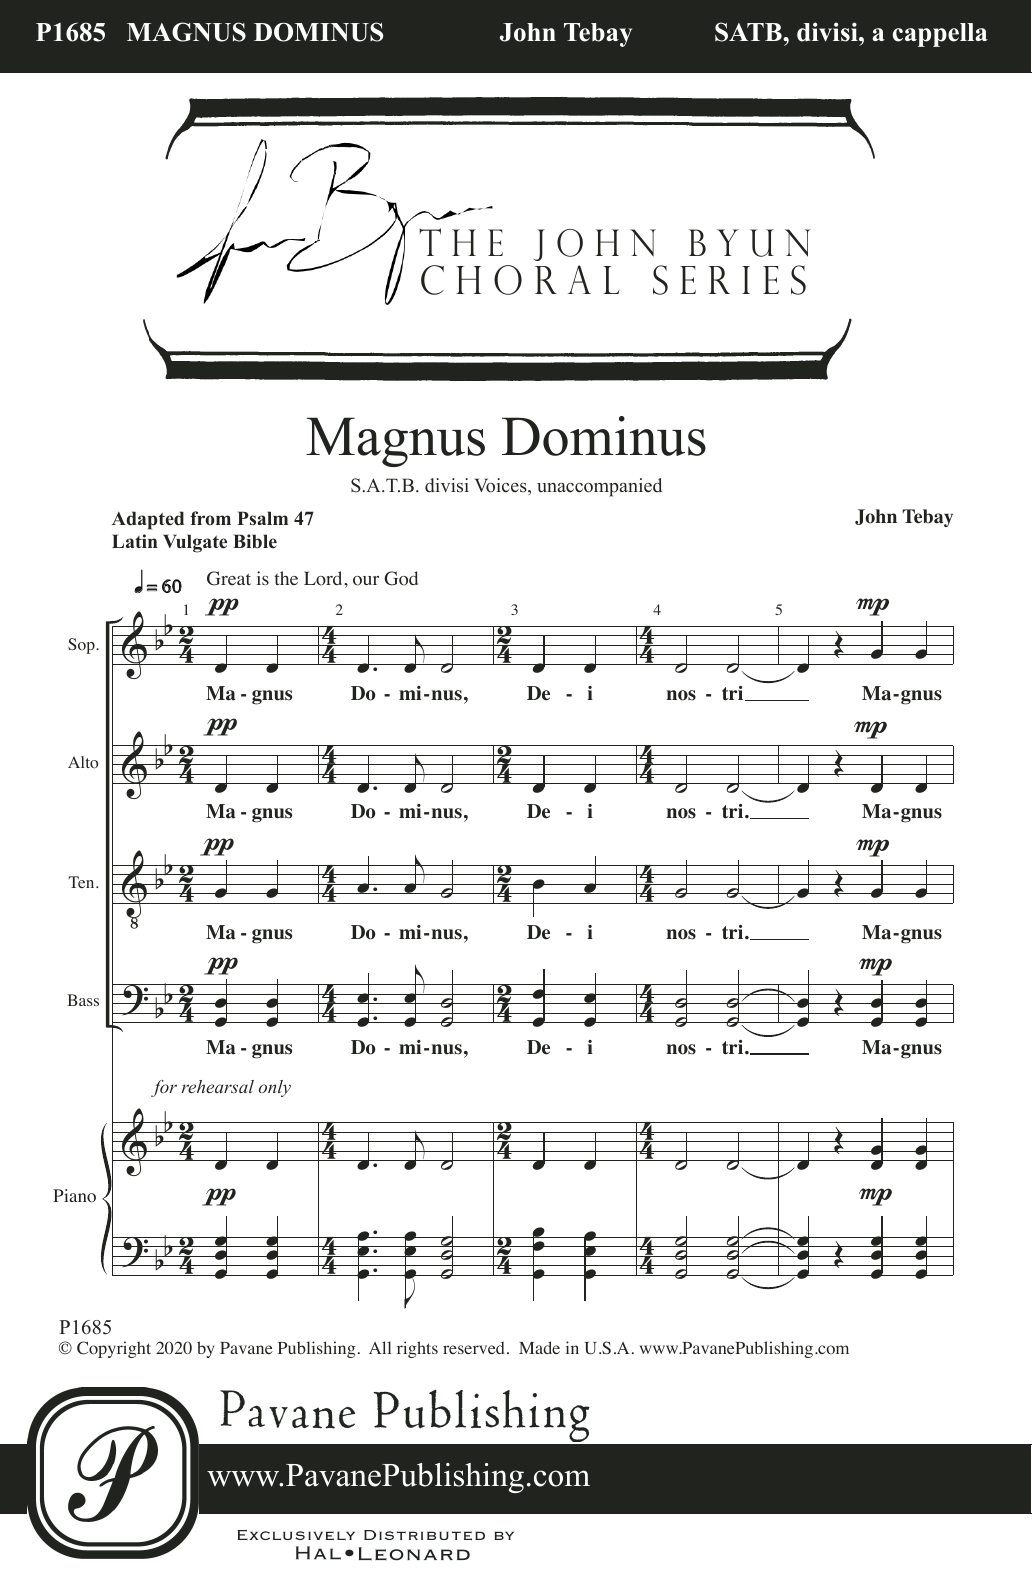 John Tebay Magnus Dominus Sheet Music Notes & Chords for SATB Choir - Download or Print PDF